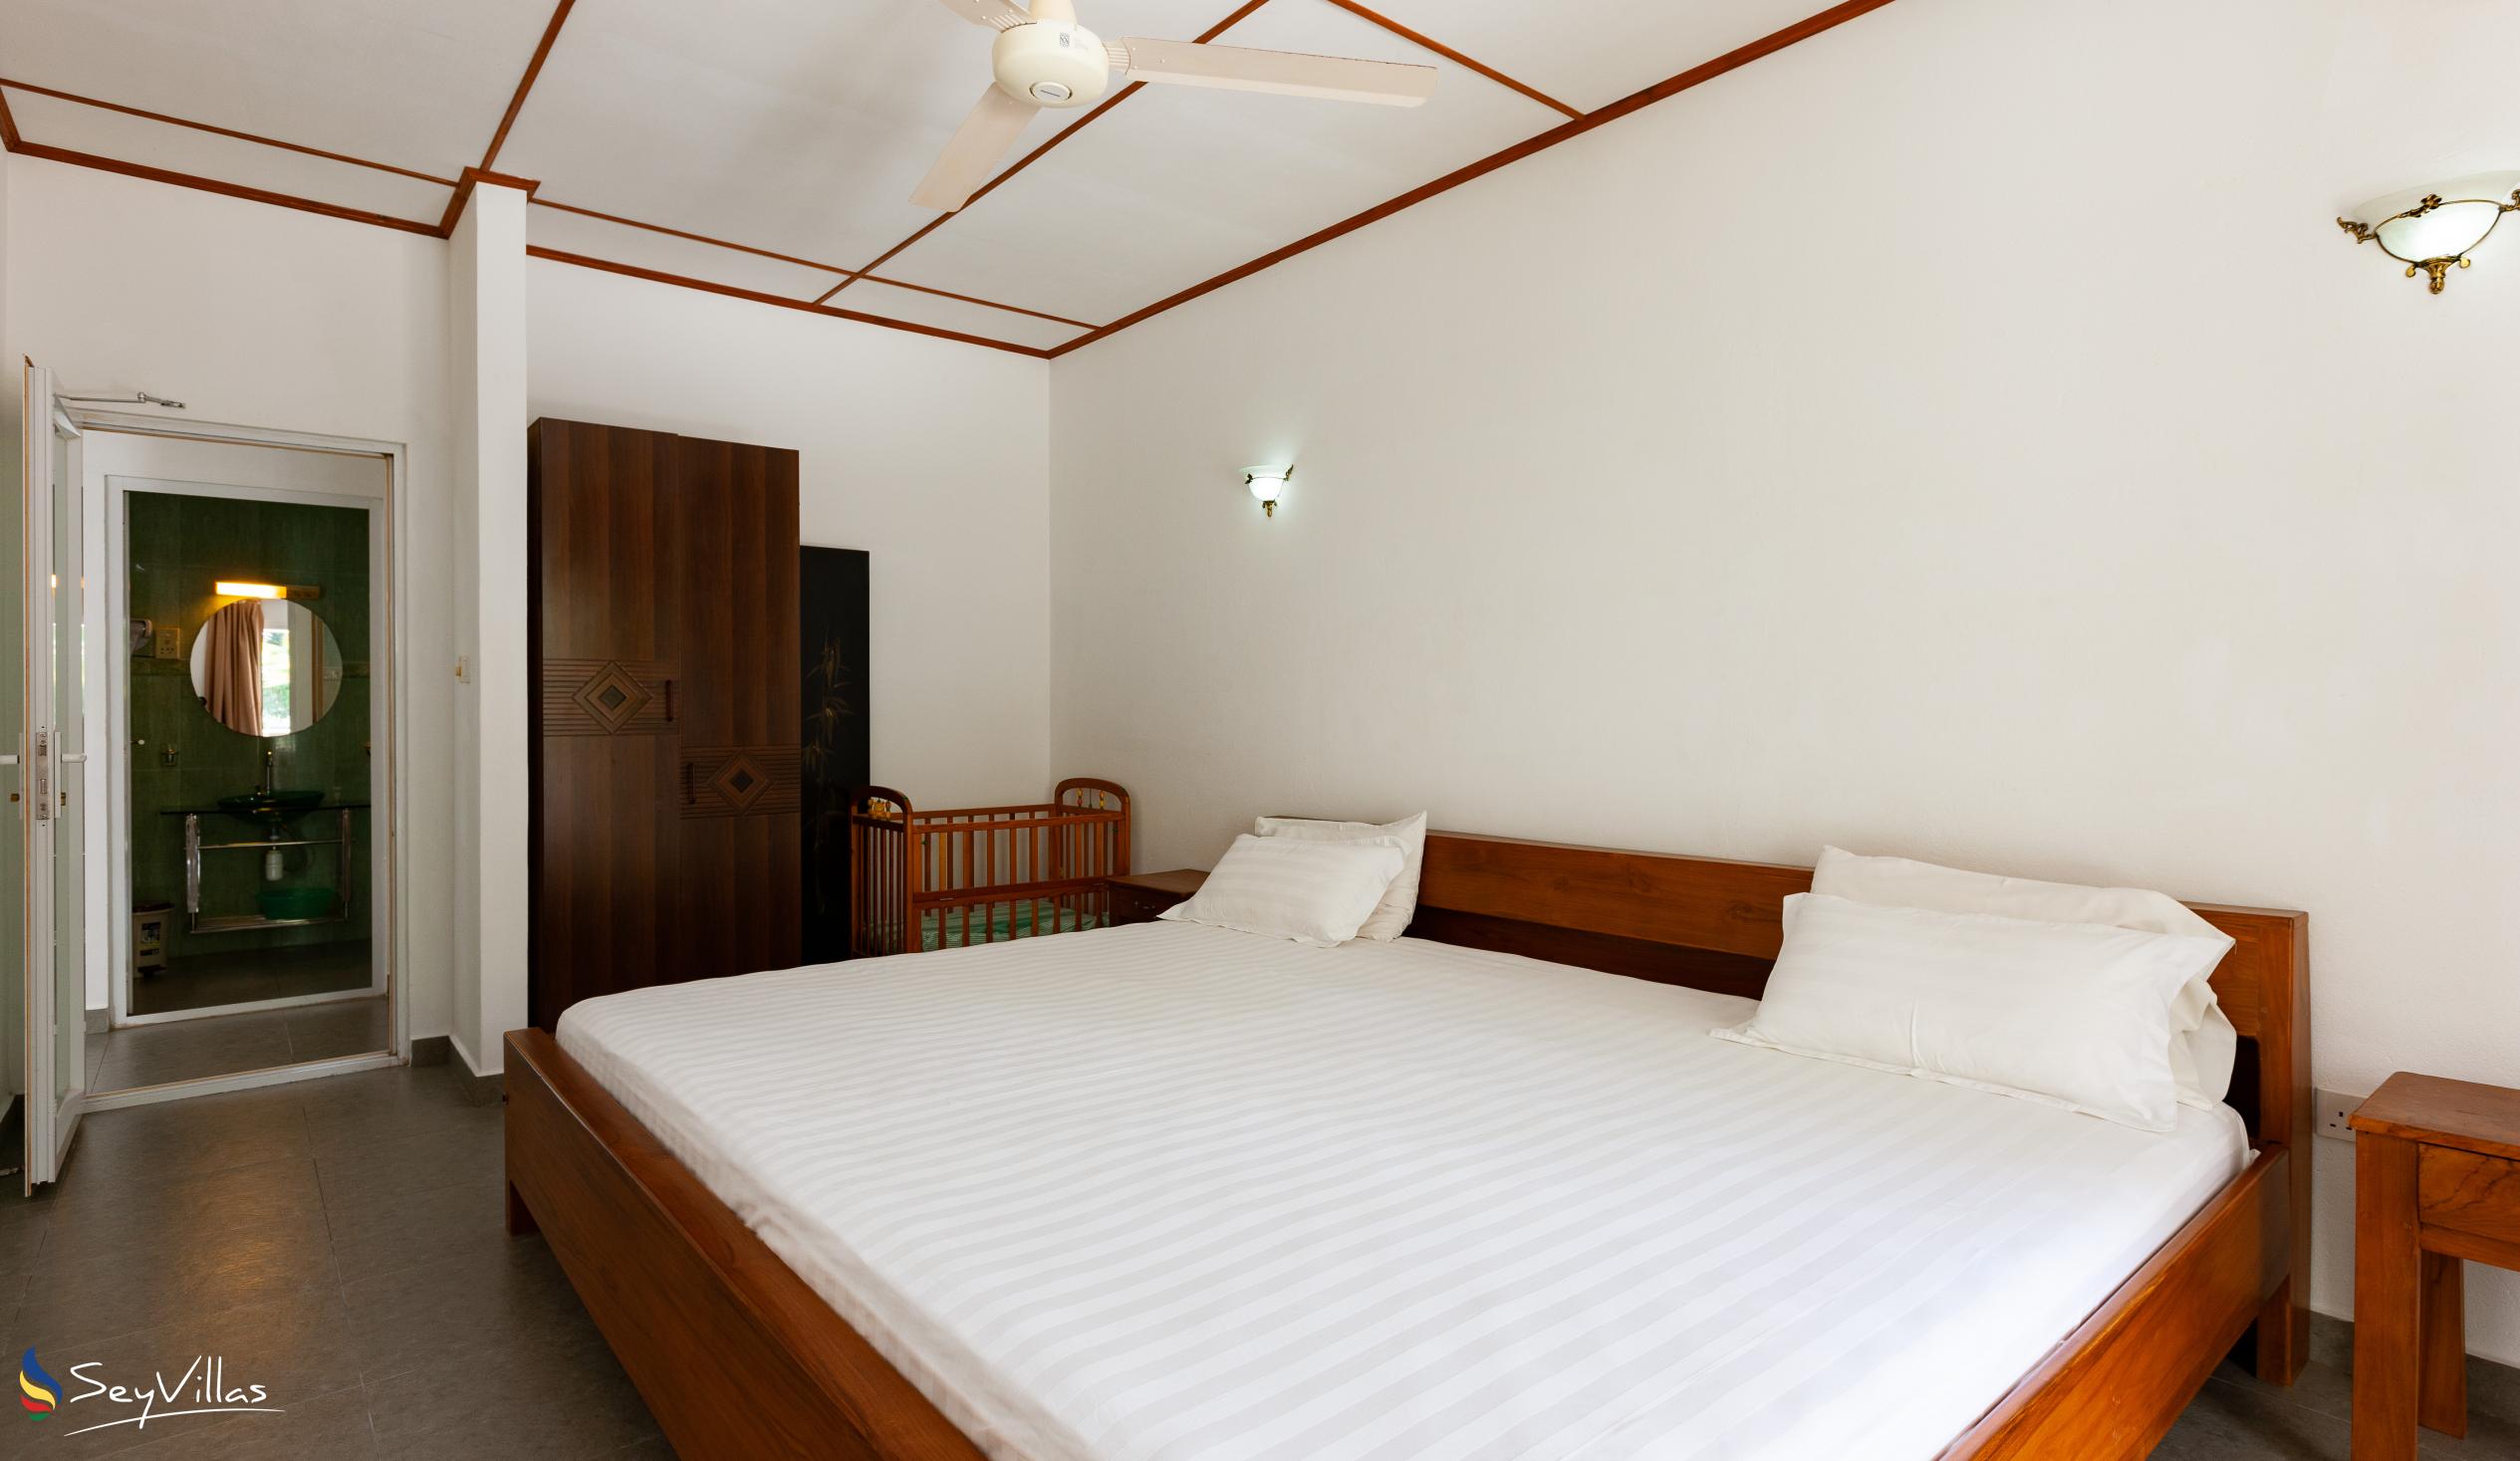 Photo 59: Hide Away - Apartment - Praslin (Seychelles)